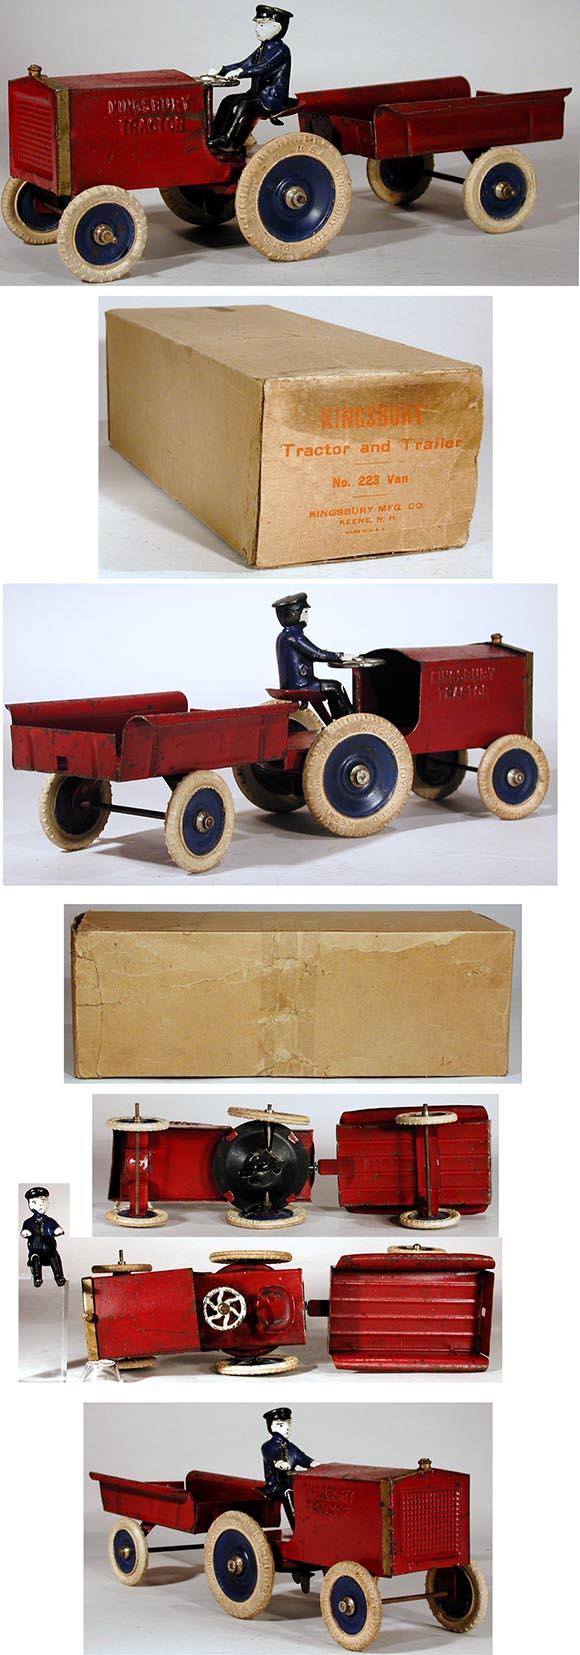 1923 Kingsbury, Mechanical Tractor & Trailer in Original Box